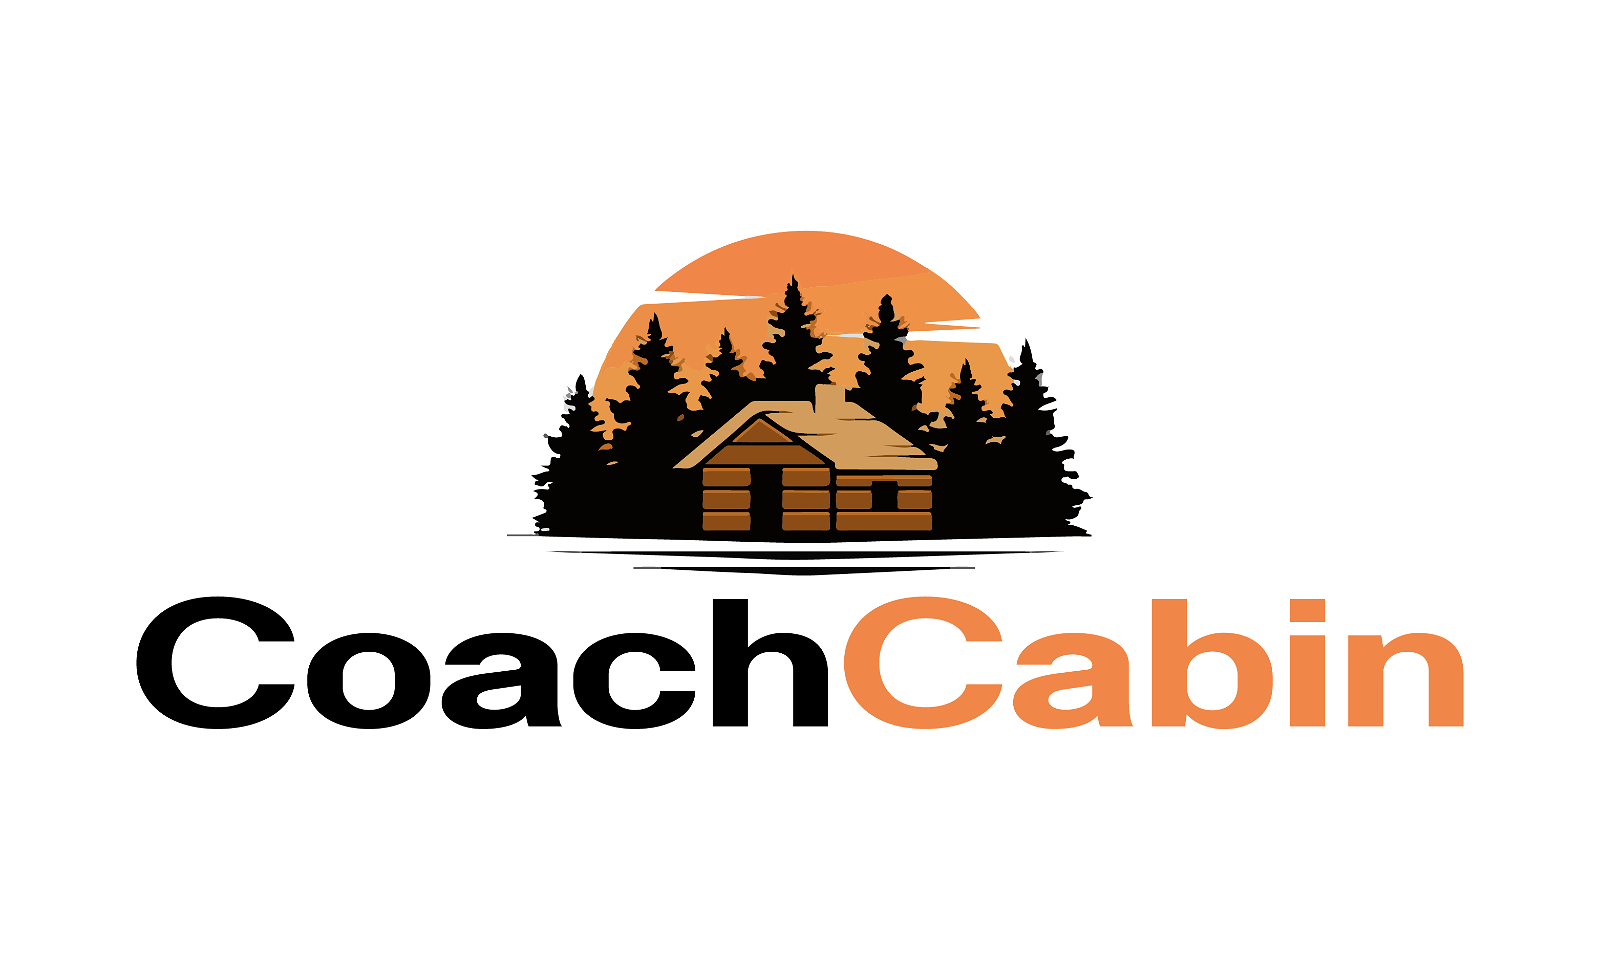 CoachCabin.com - Creative brandable domain for sale